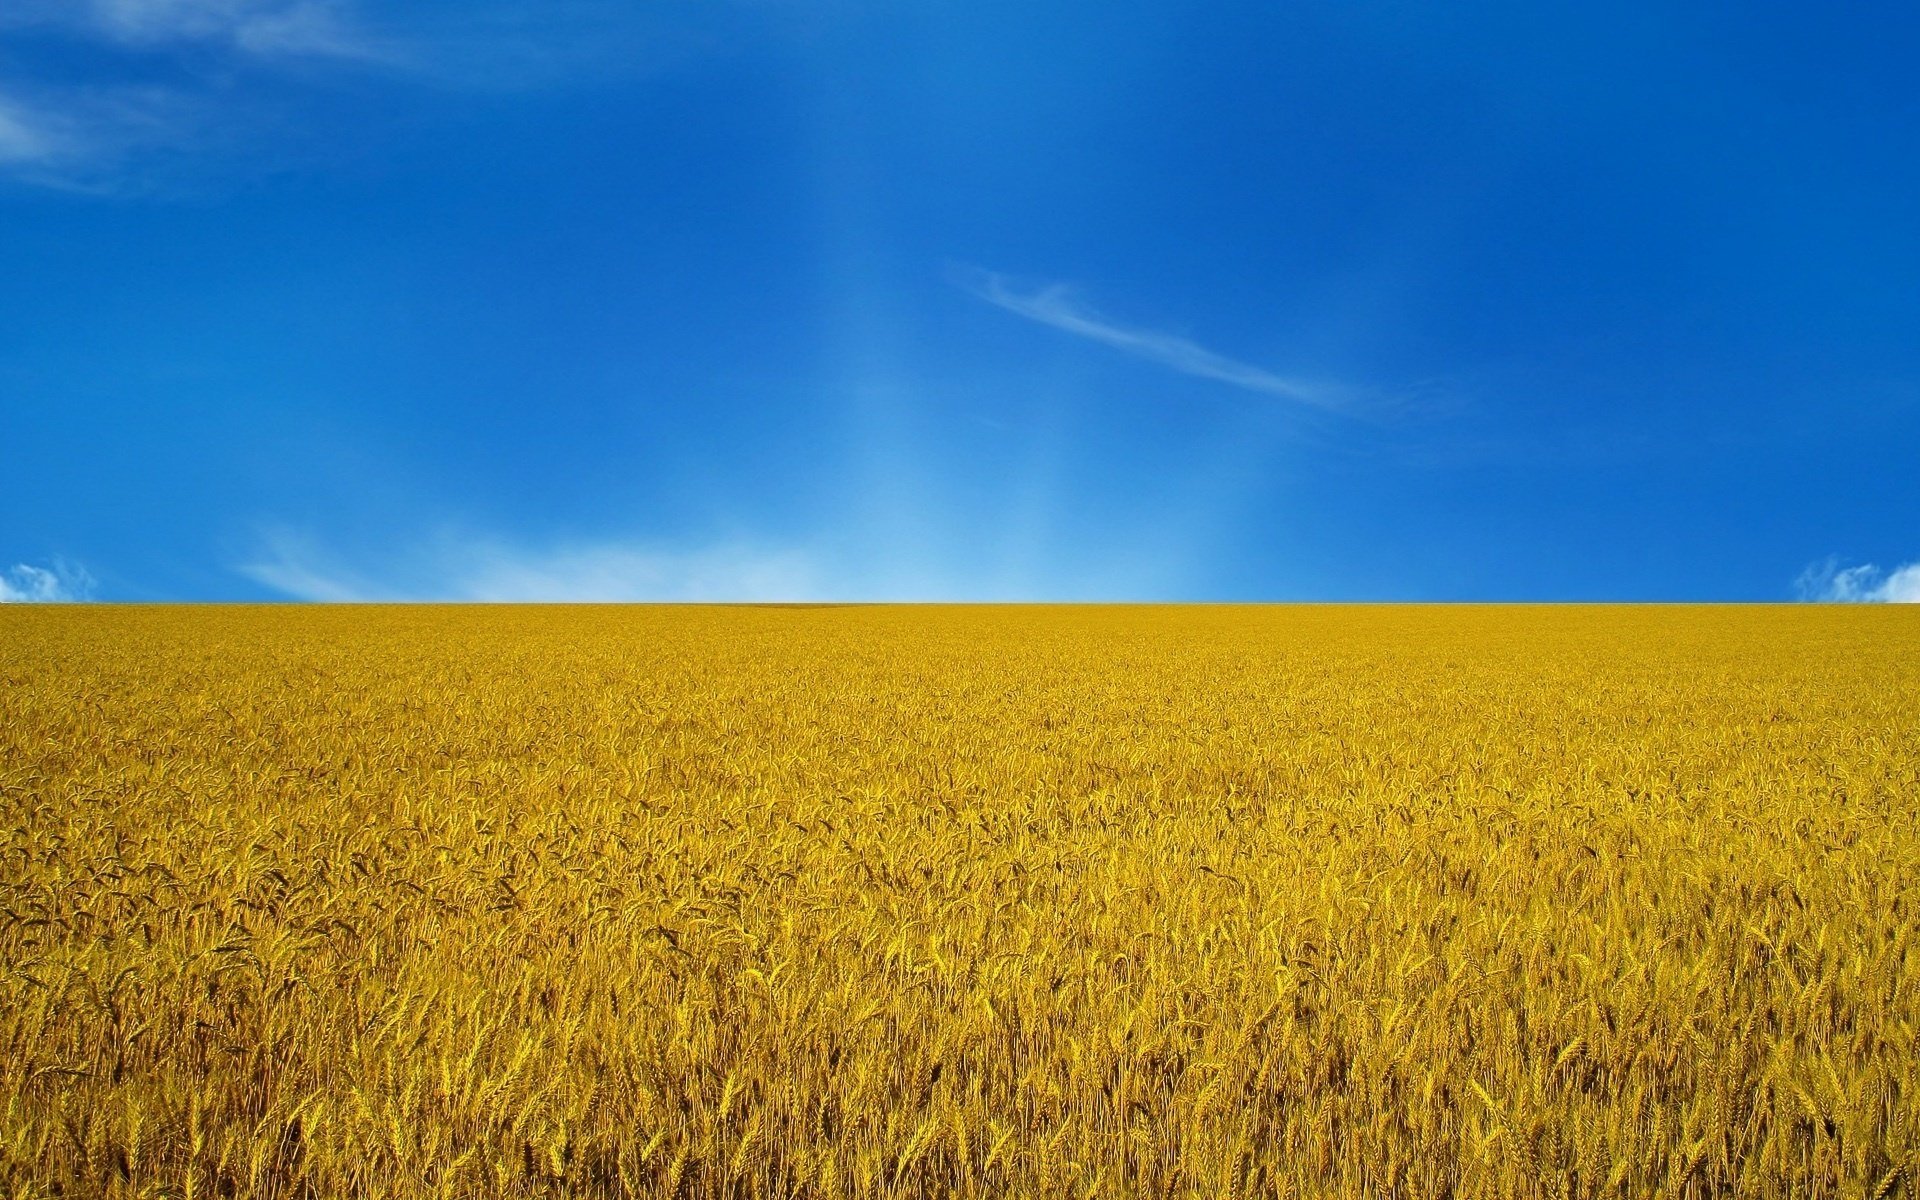 ukraine the flag of ukraine blue-yellow flags ears the sky field sunset